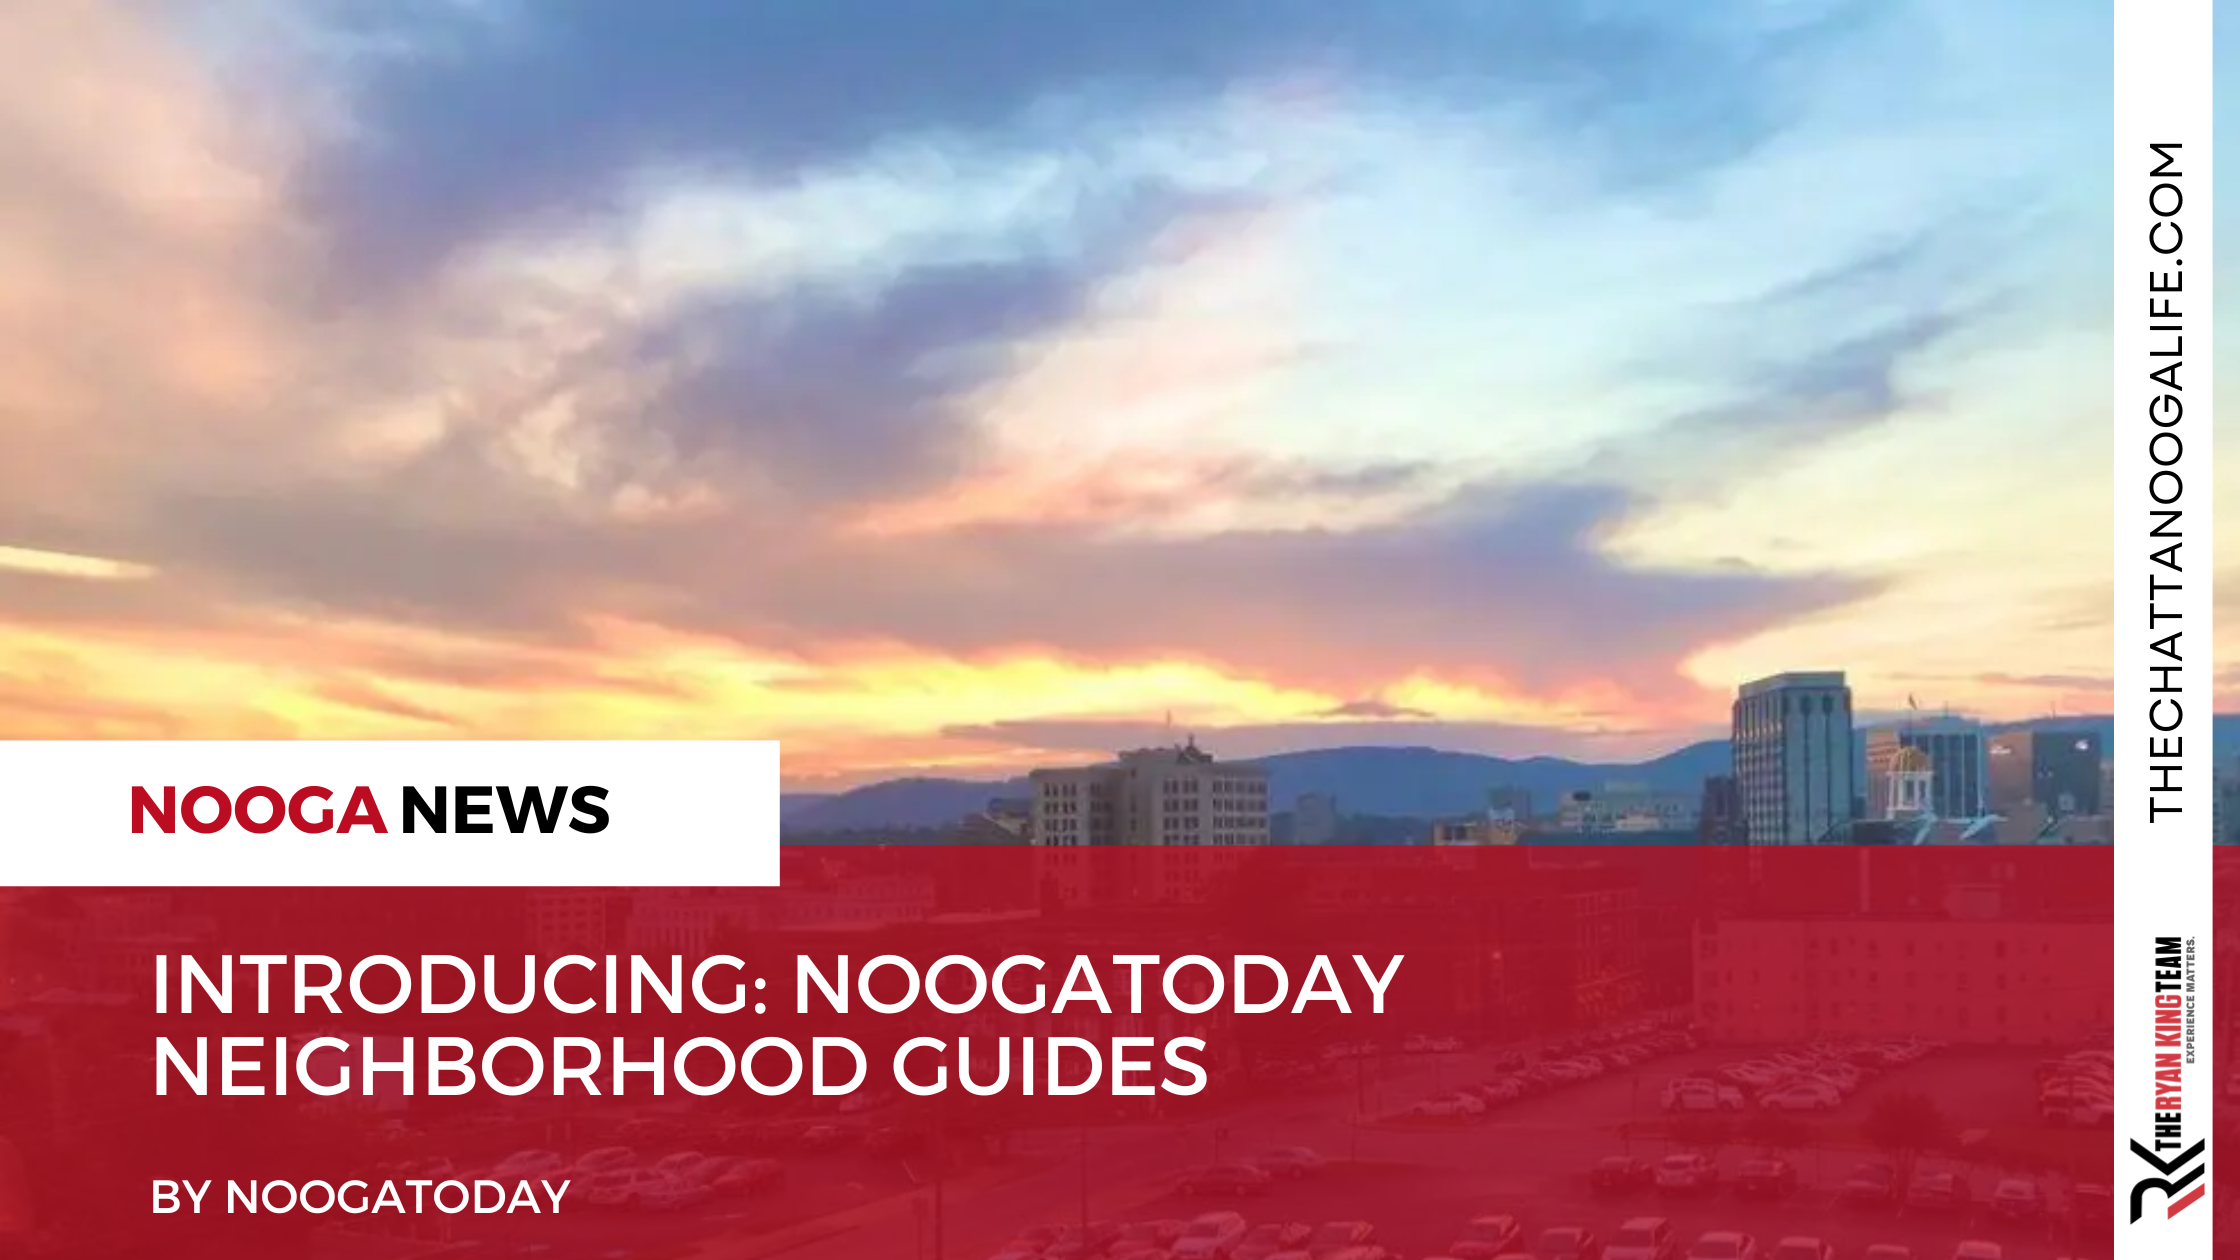 Introducing: NOOGAtoday Neighborhood Guides